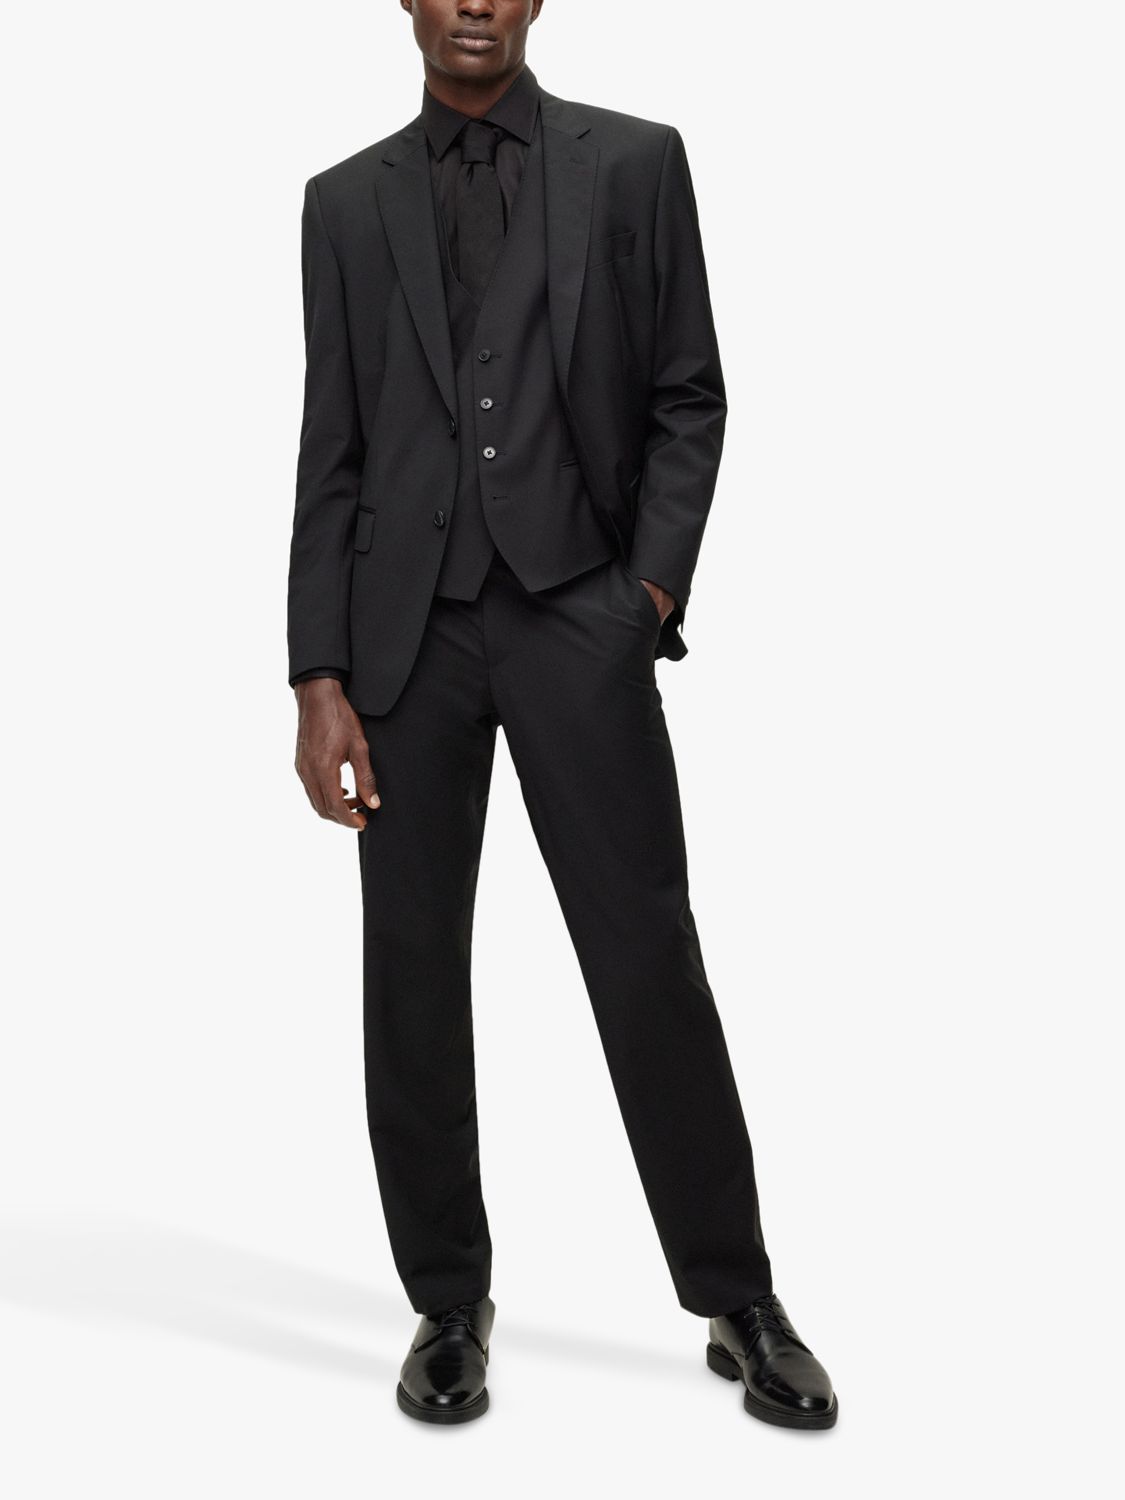 HUGO BOSS Leon Regular Fit Wool Blend Suit Trousers, Black, 30R